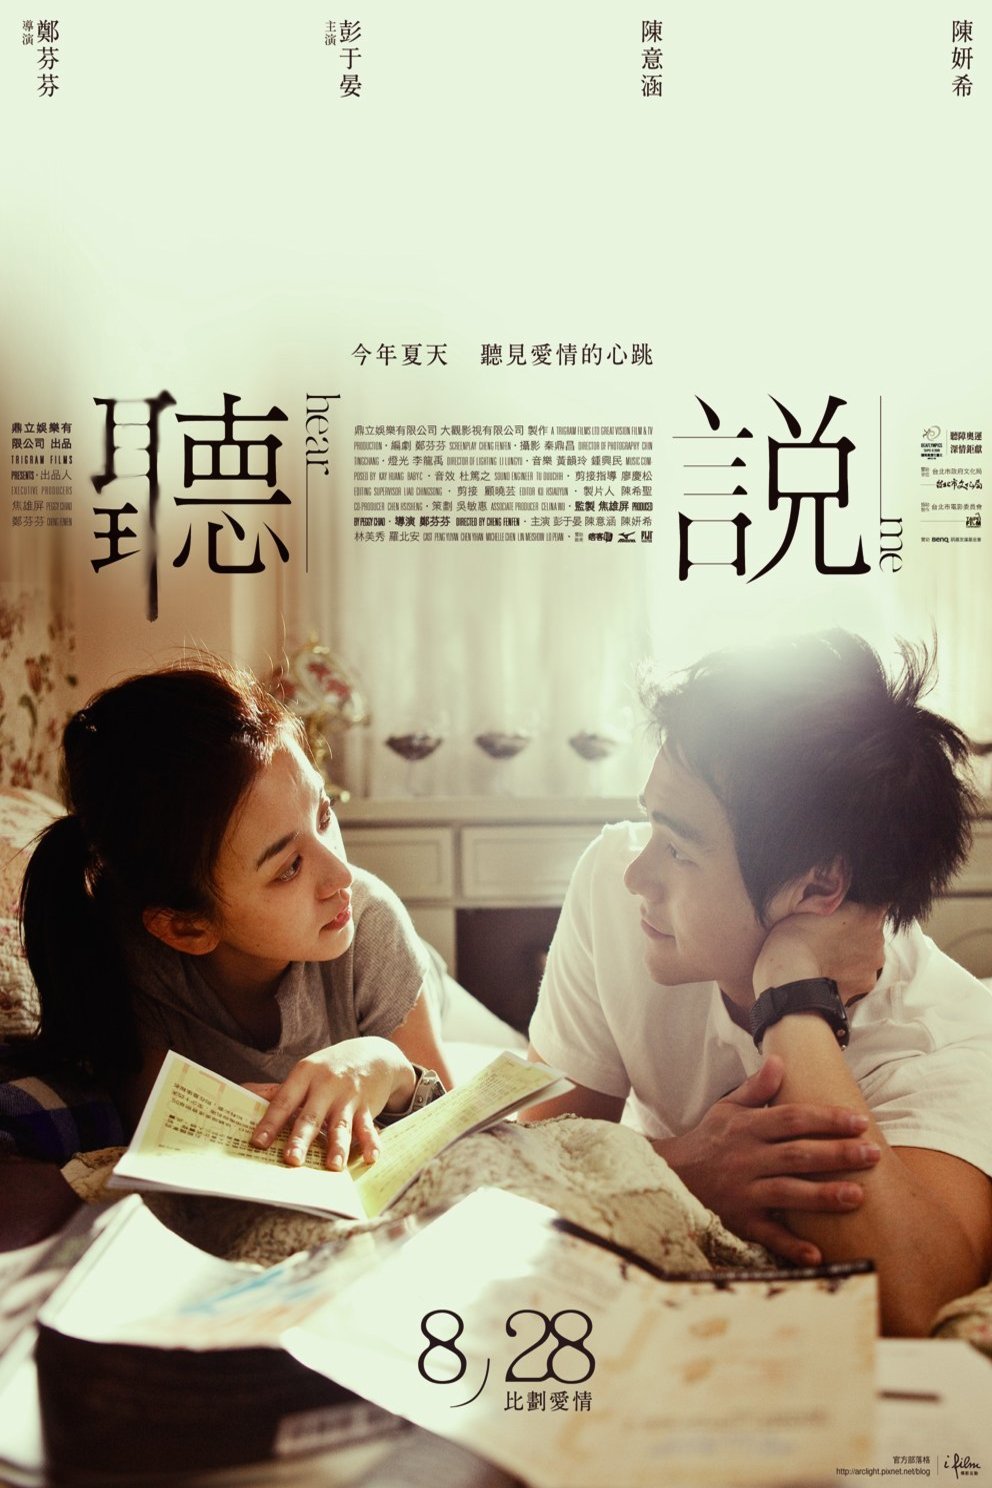 Mandarin poster of the movie Hear Me